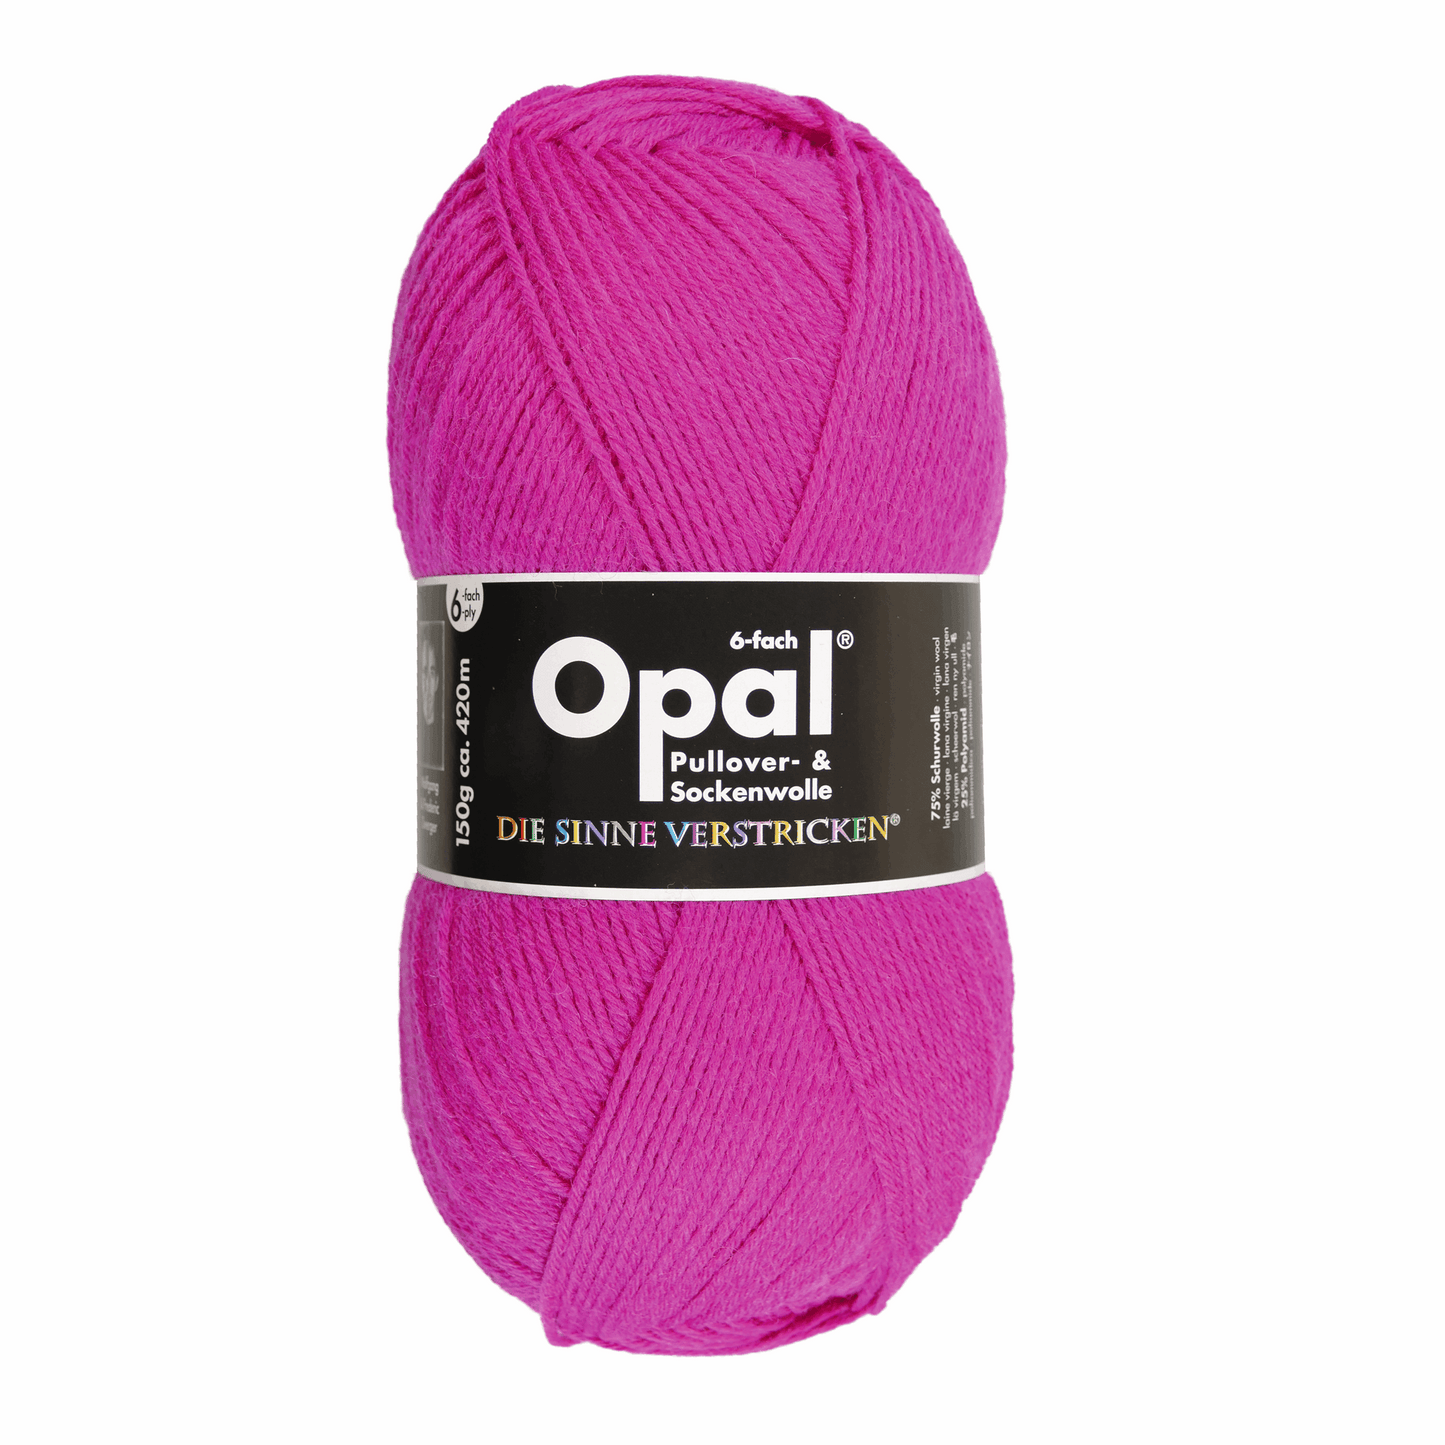 Opal uni 6-fold, 97764, color pink 7901